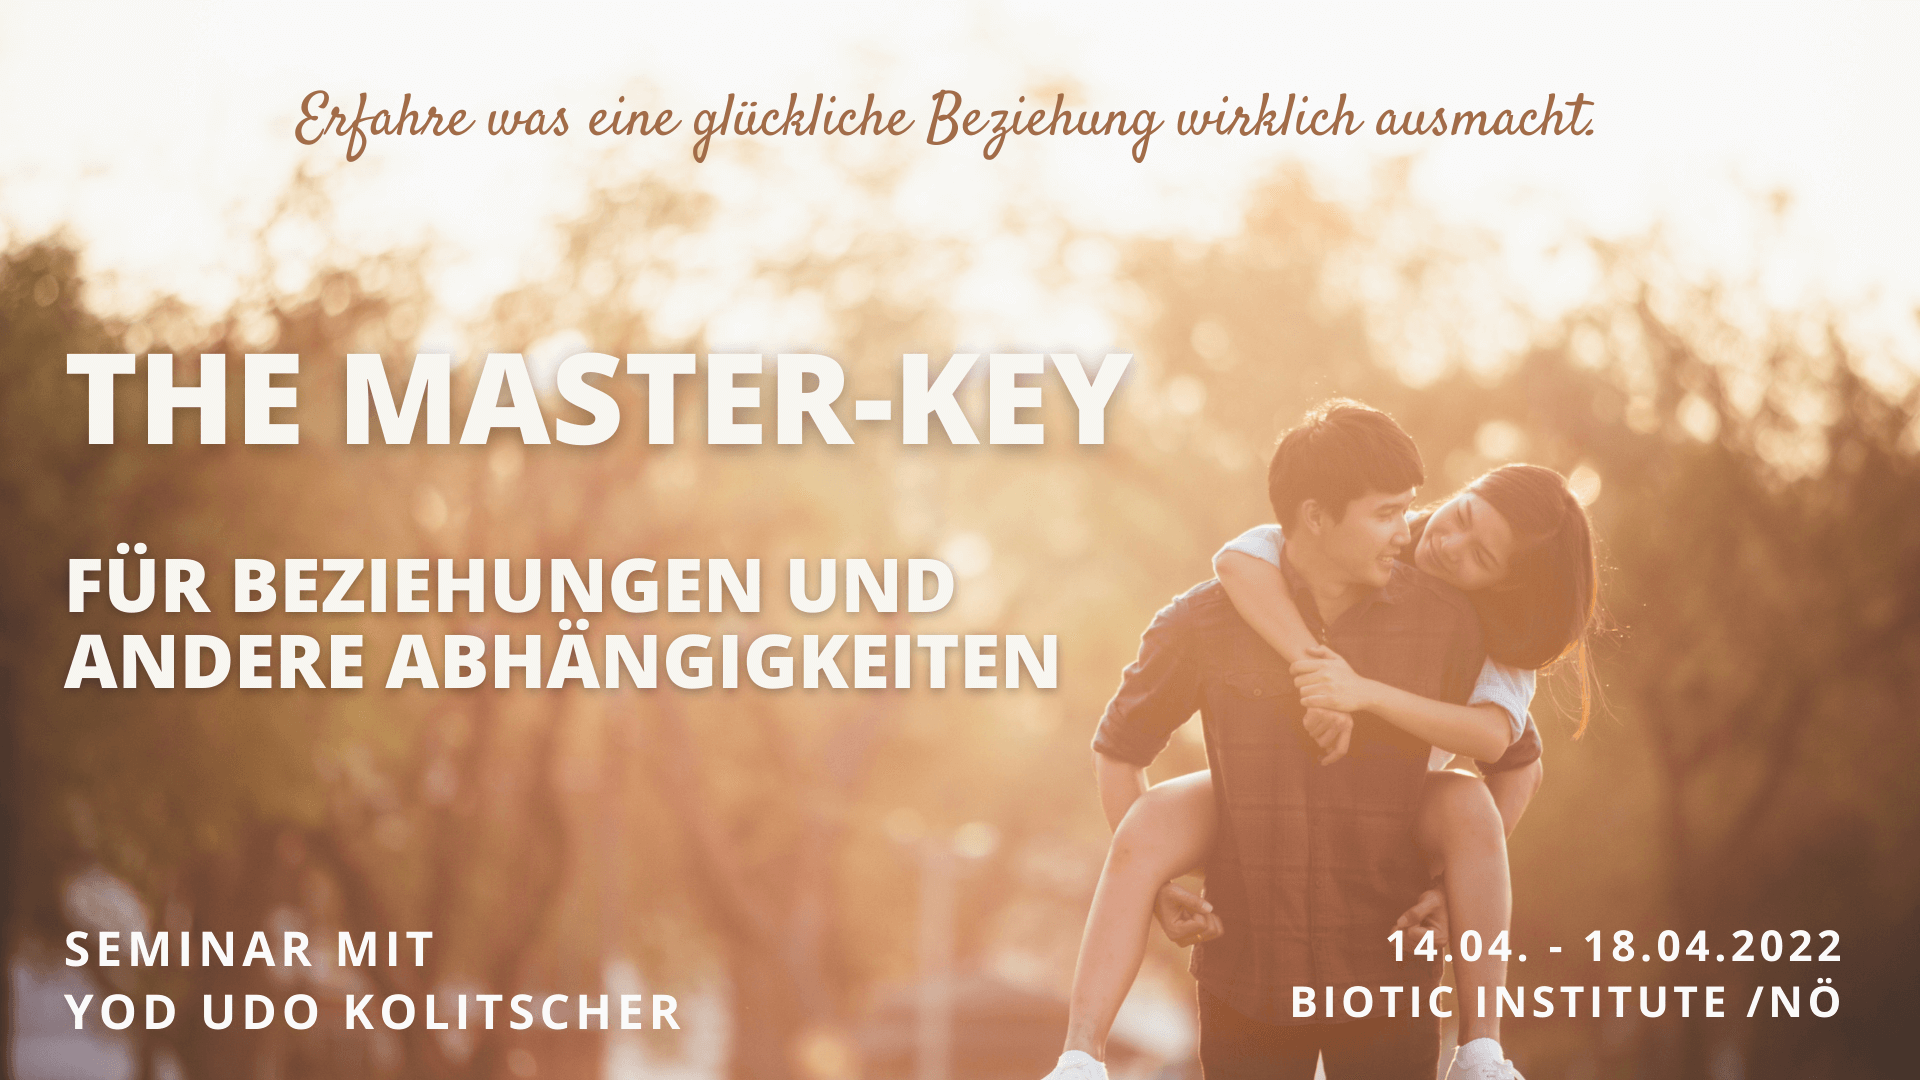 The Master-Key